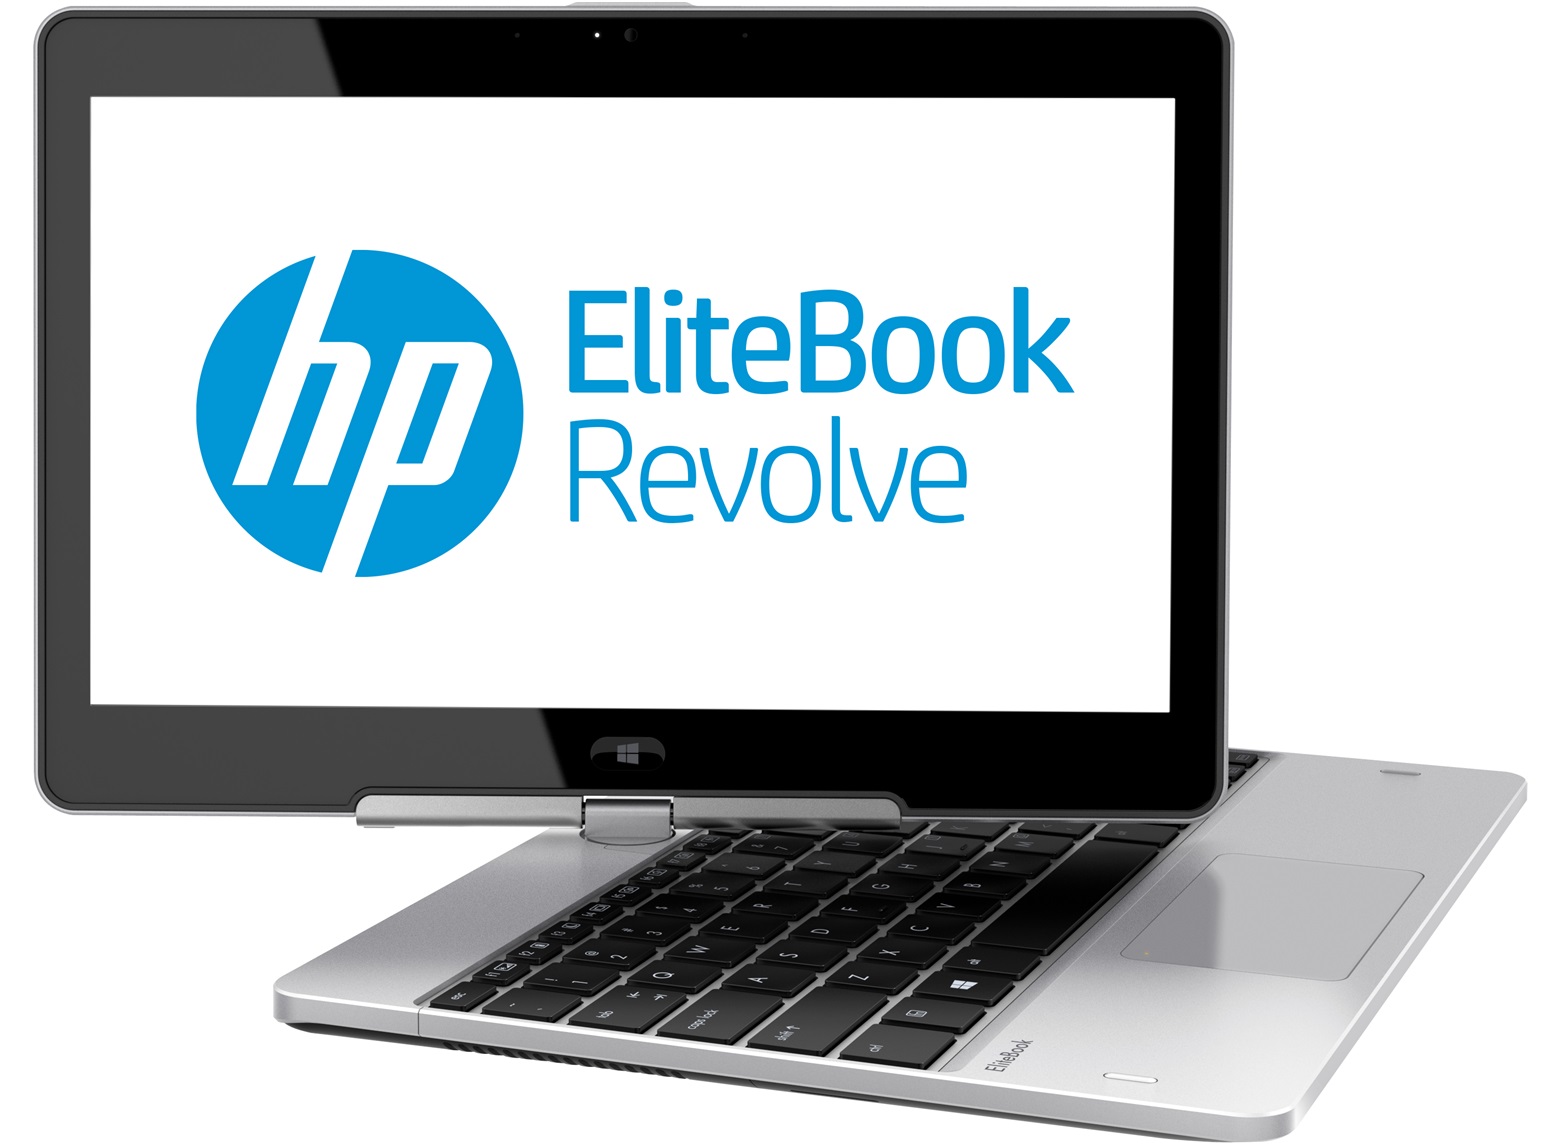 HP EliteBook Revolve 810 G1 Intel Core i7 8 GB Memory 256GB SSD HDD 11.6" Tablet PC Windows 7 Professional 64 bit